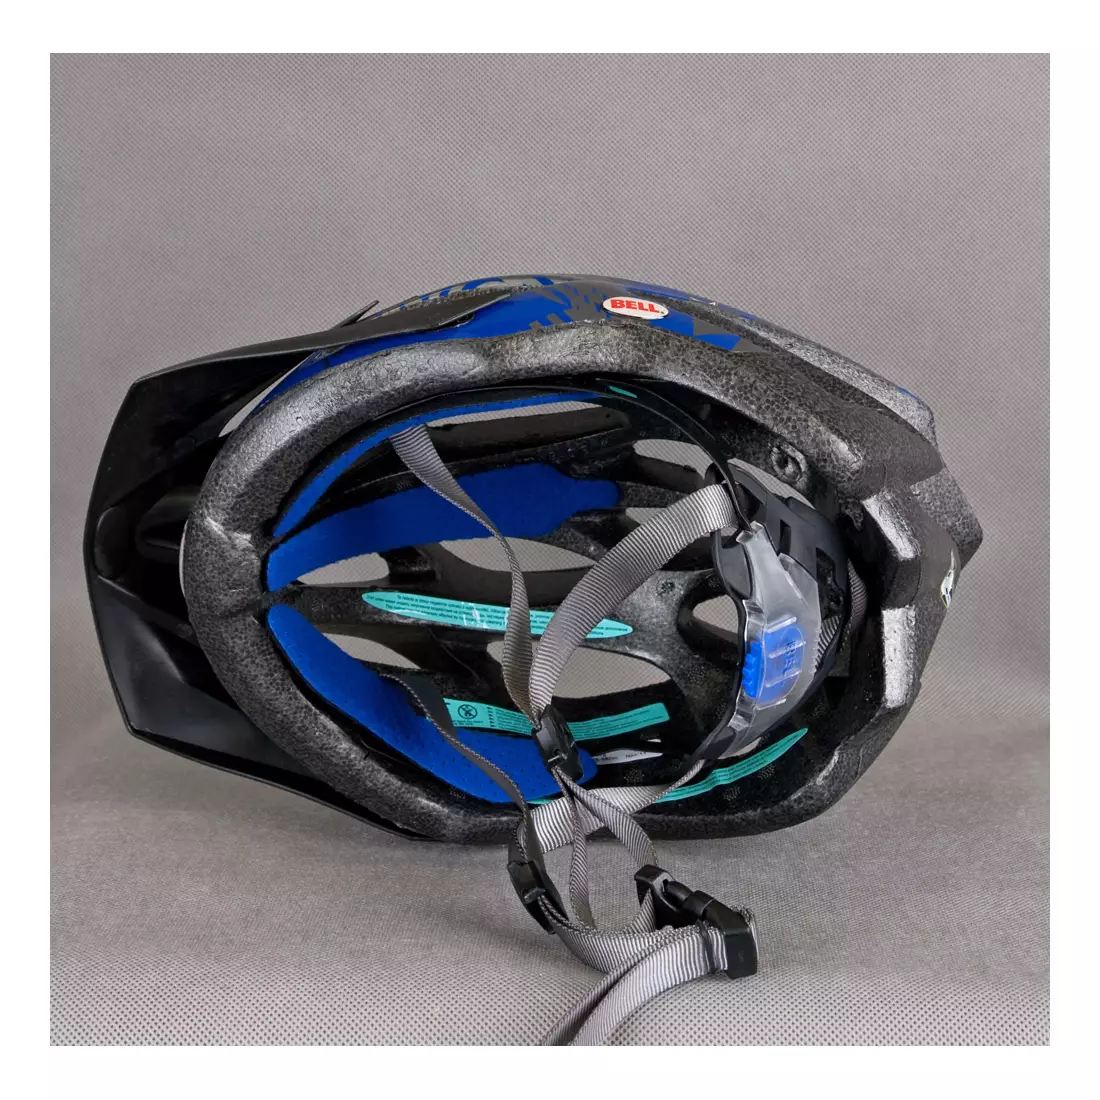 Cyklistická přilba BELL - DELIRIUM modro-titanová